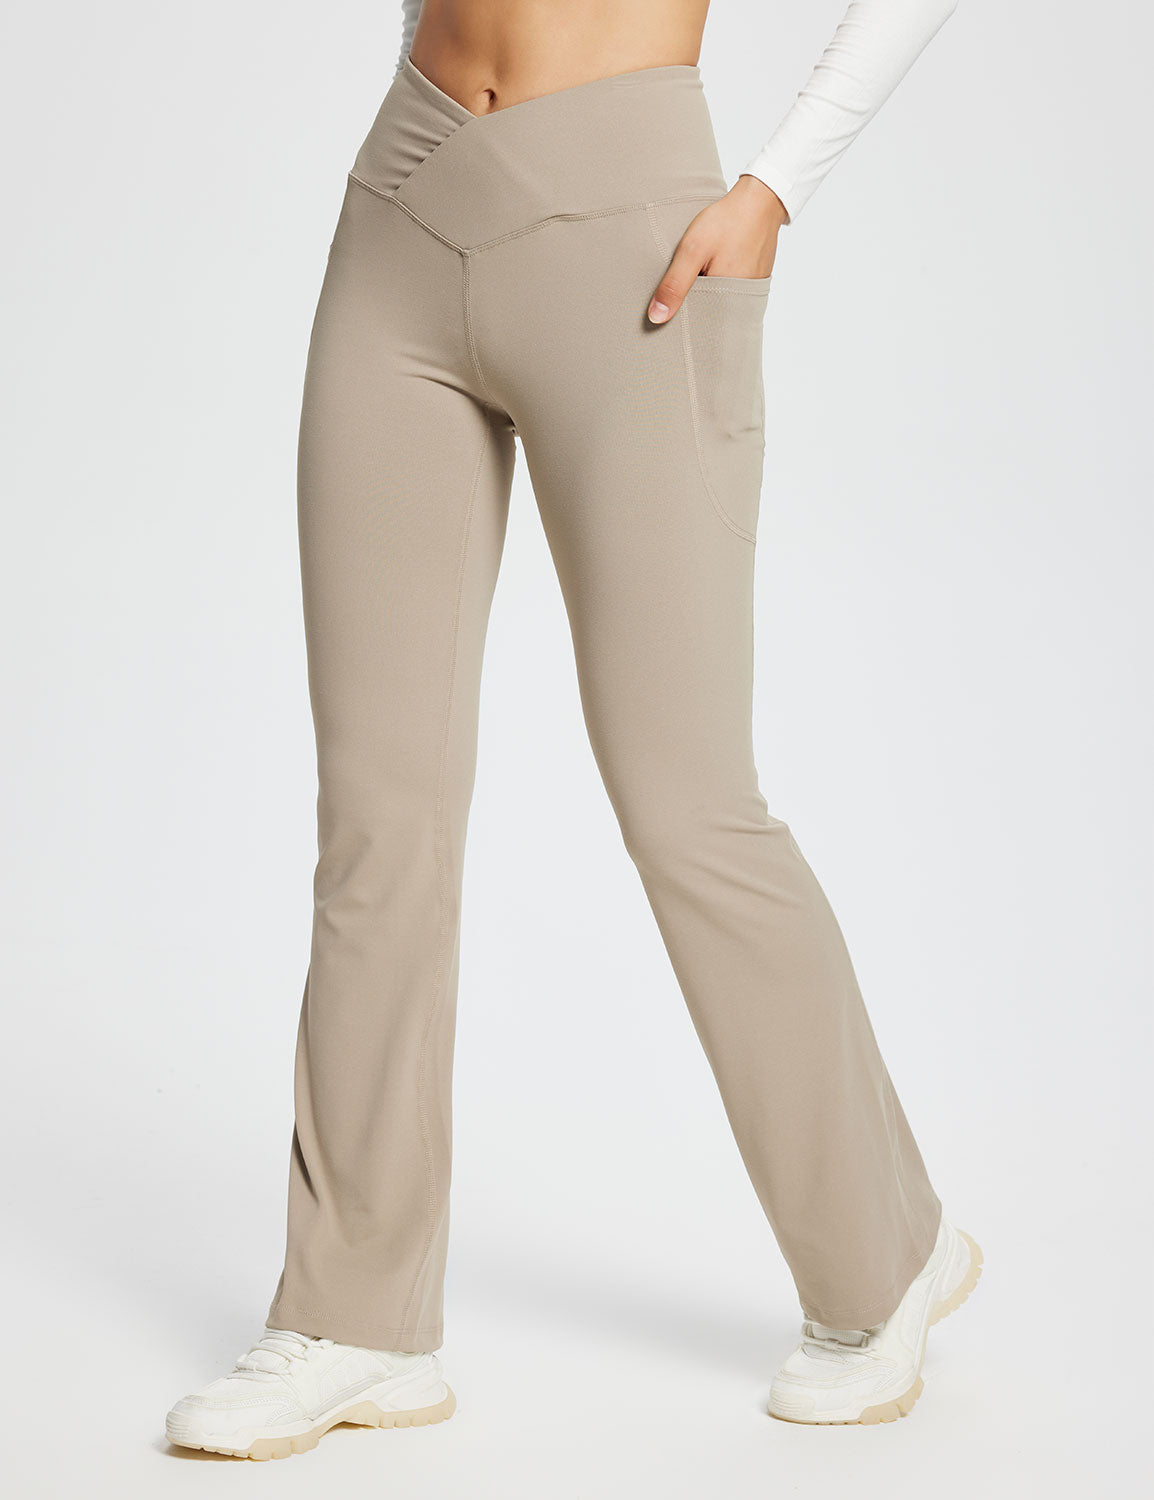  BALEAF Women's Flare Leggings High Waisted Yoga Pants Casual  Workout Wide Leg Dressy Pants Khaki 29 XS : Clothing, Shoes & Jewelry